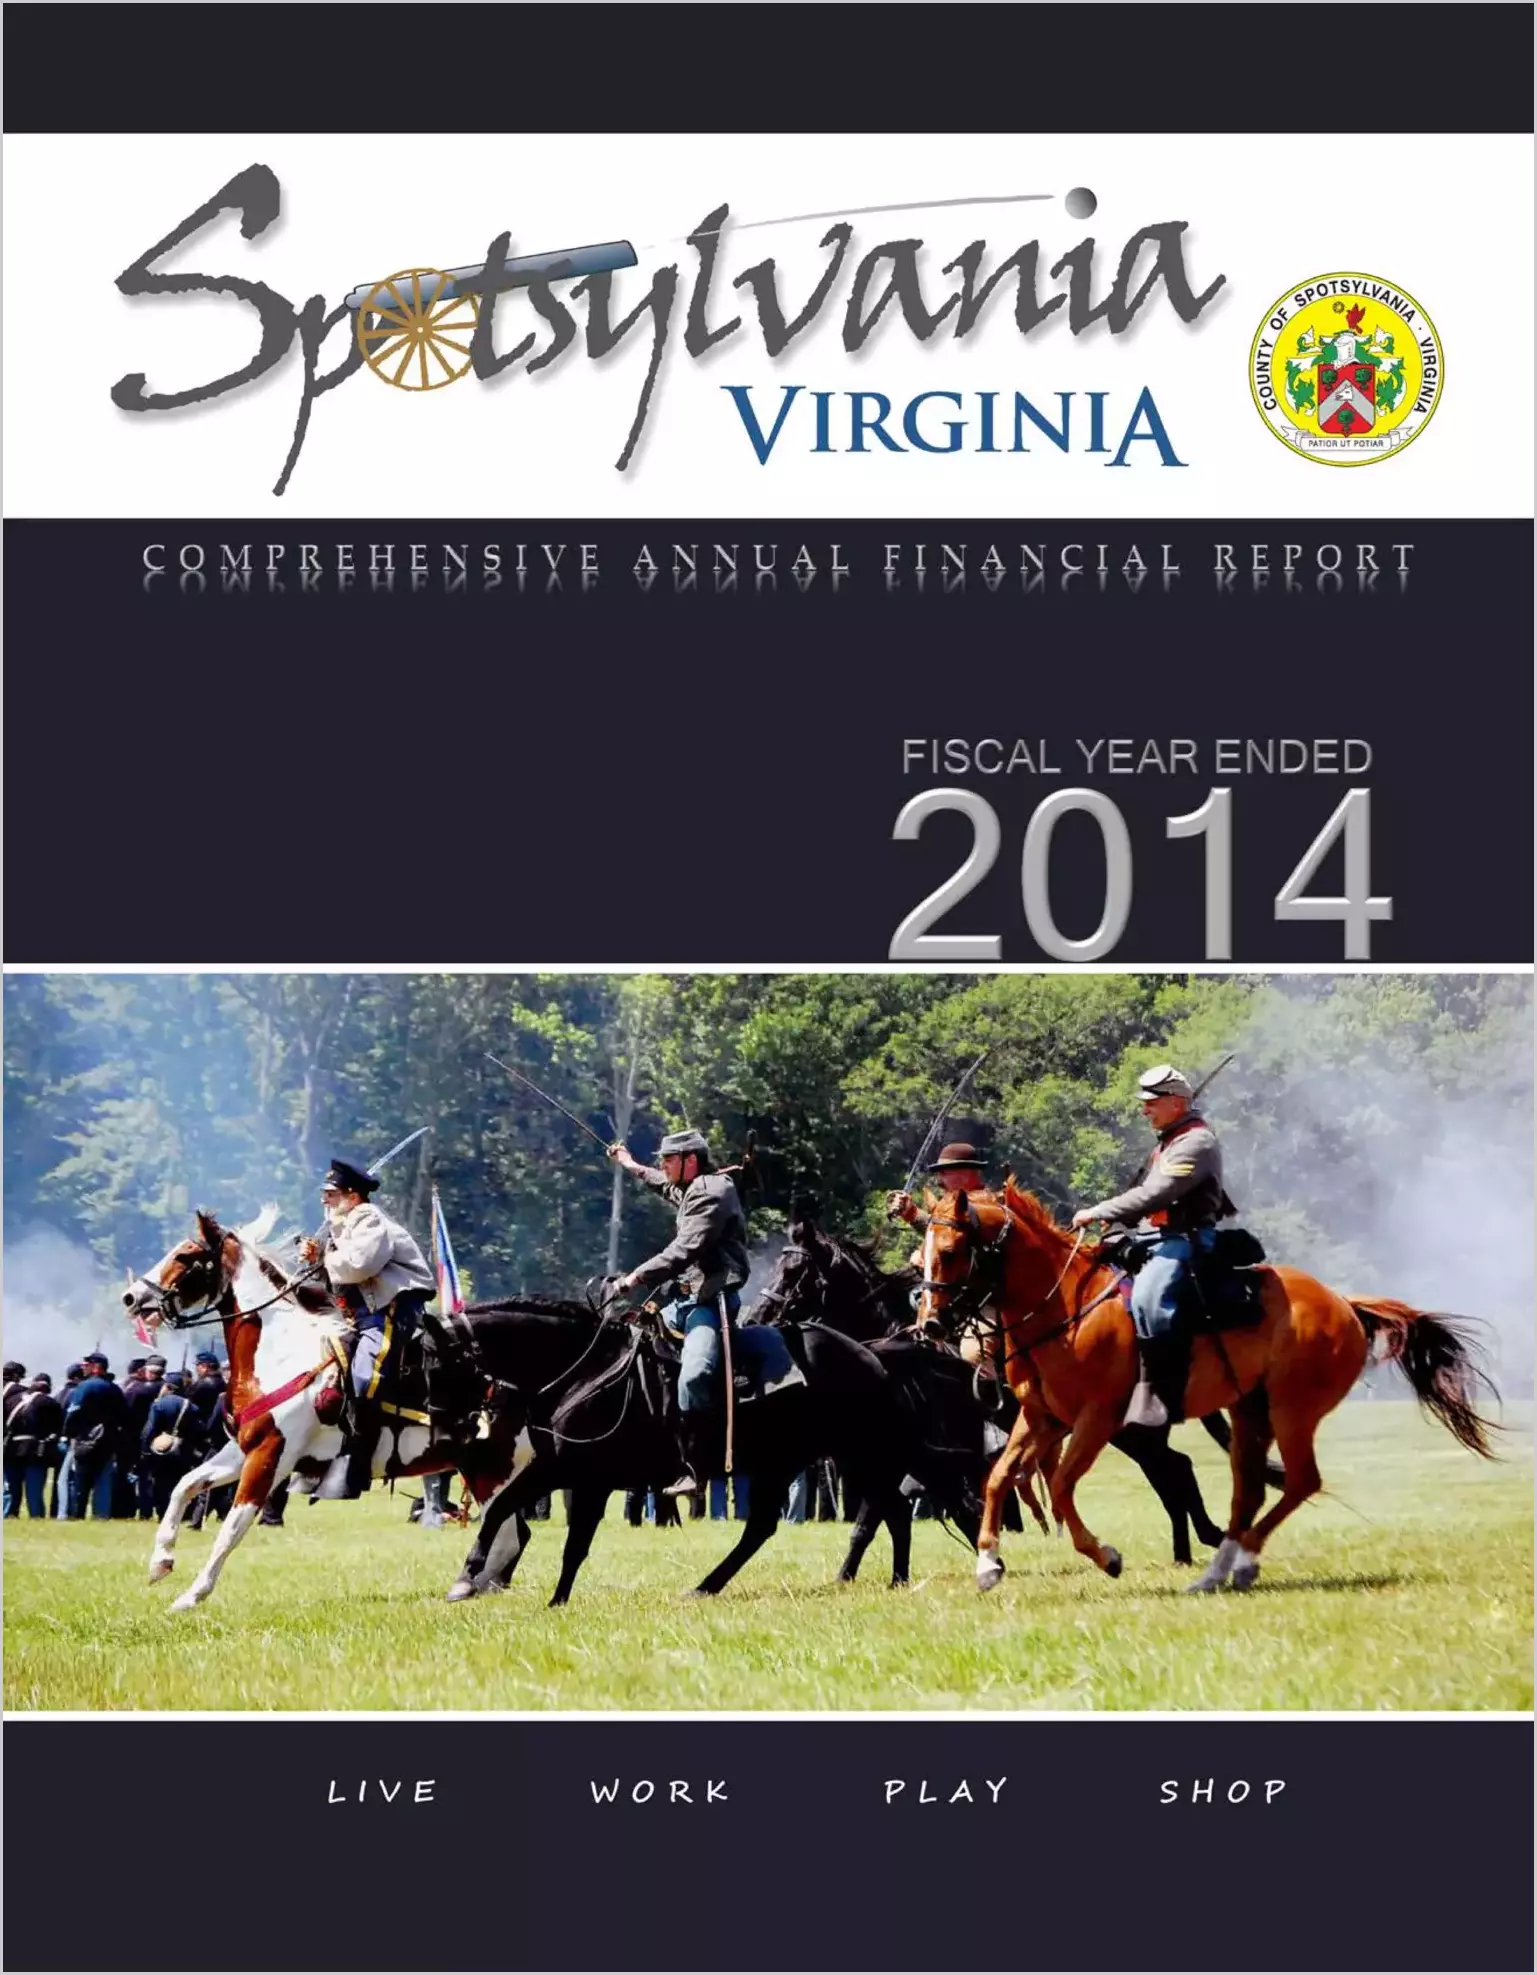 2014 Annual Financial Report for County of Spotsylvania